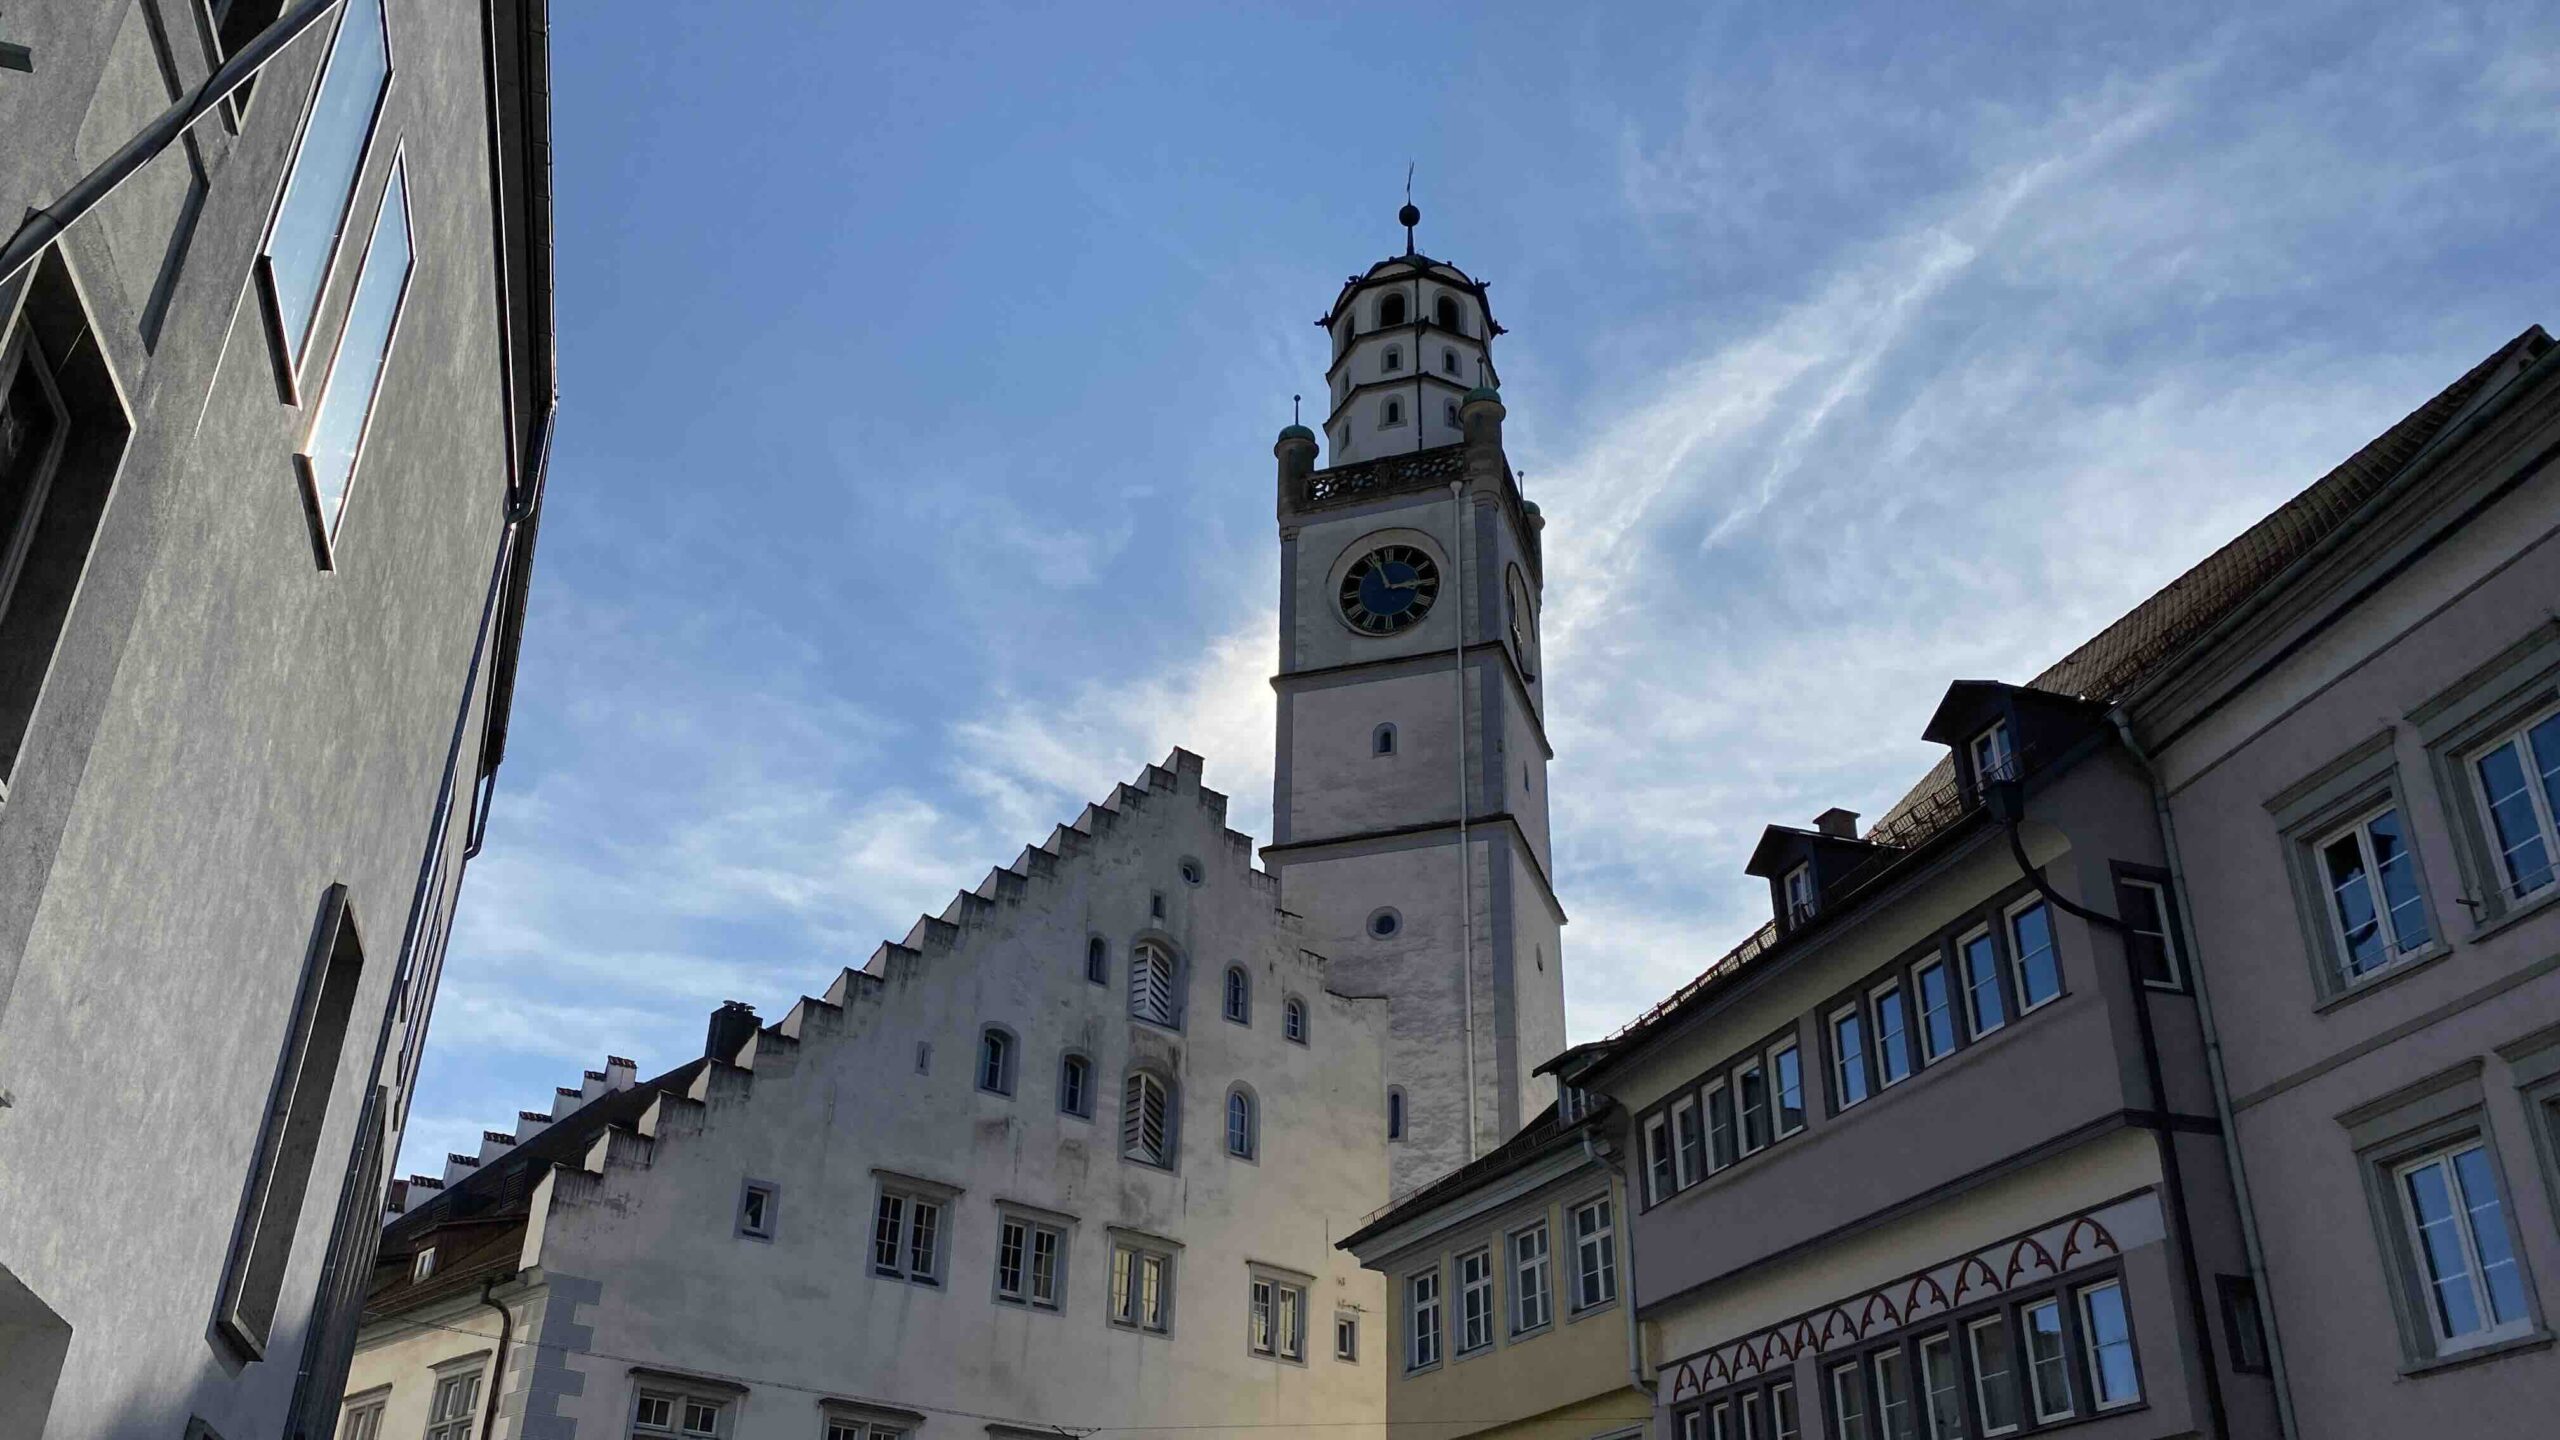 The Blaserturm Tower Exploring Ravensburg Photo by Bryan Dearsley